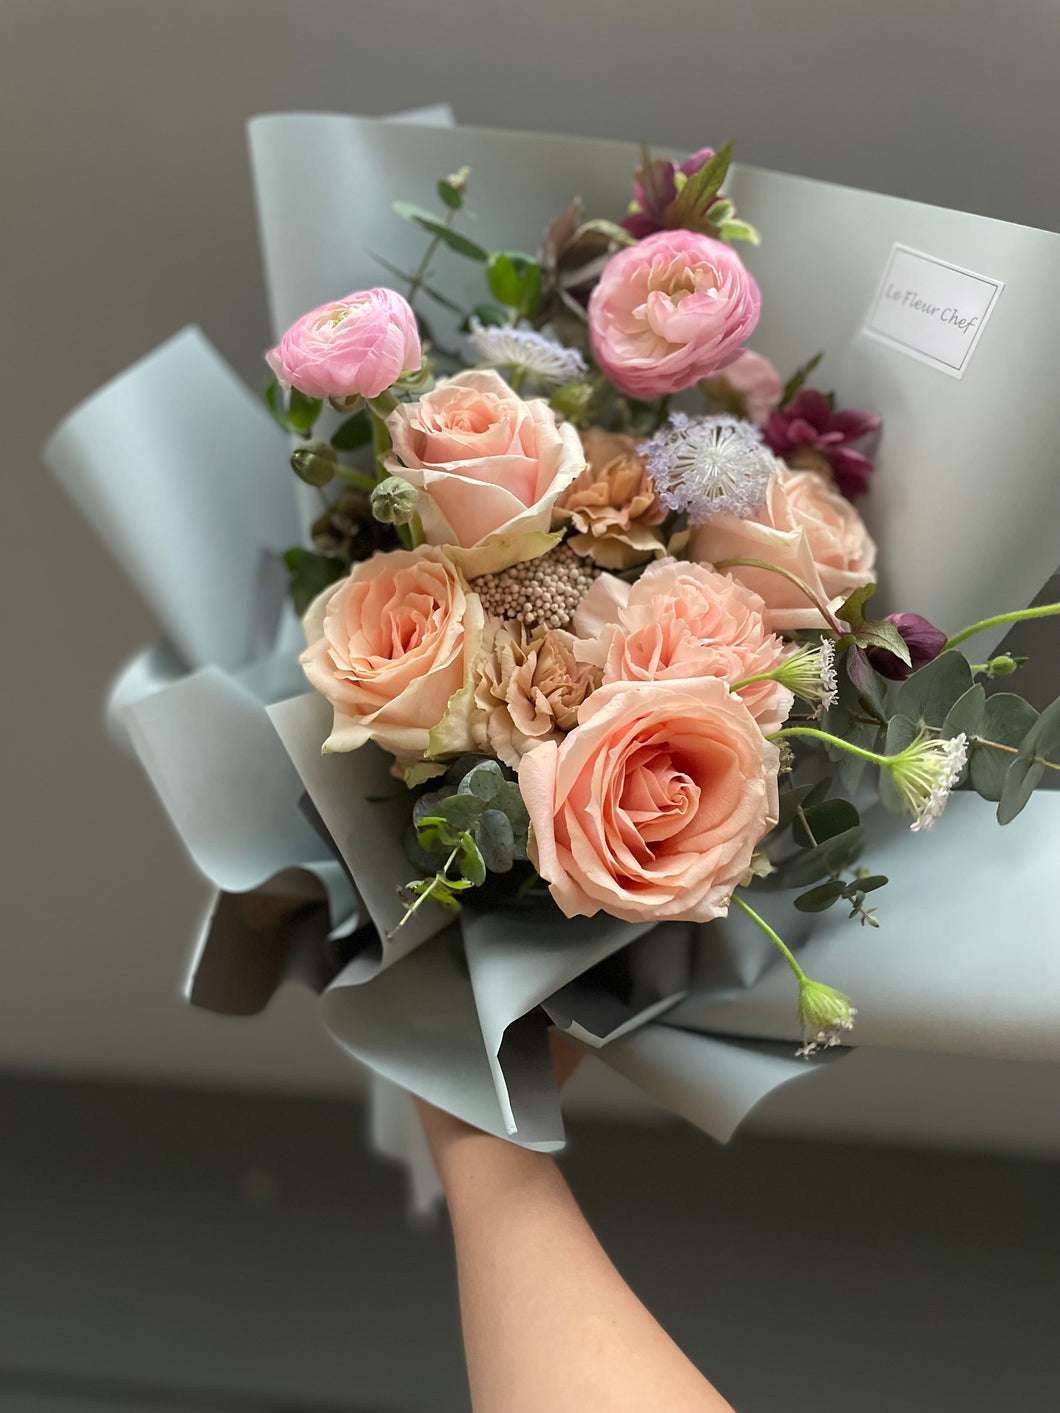 Fresh flower bouquet arrangement workshop (Private)